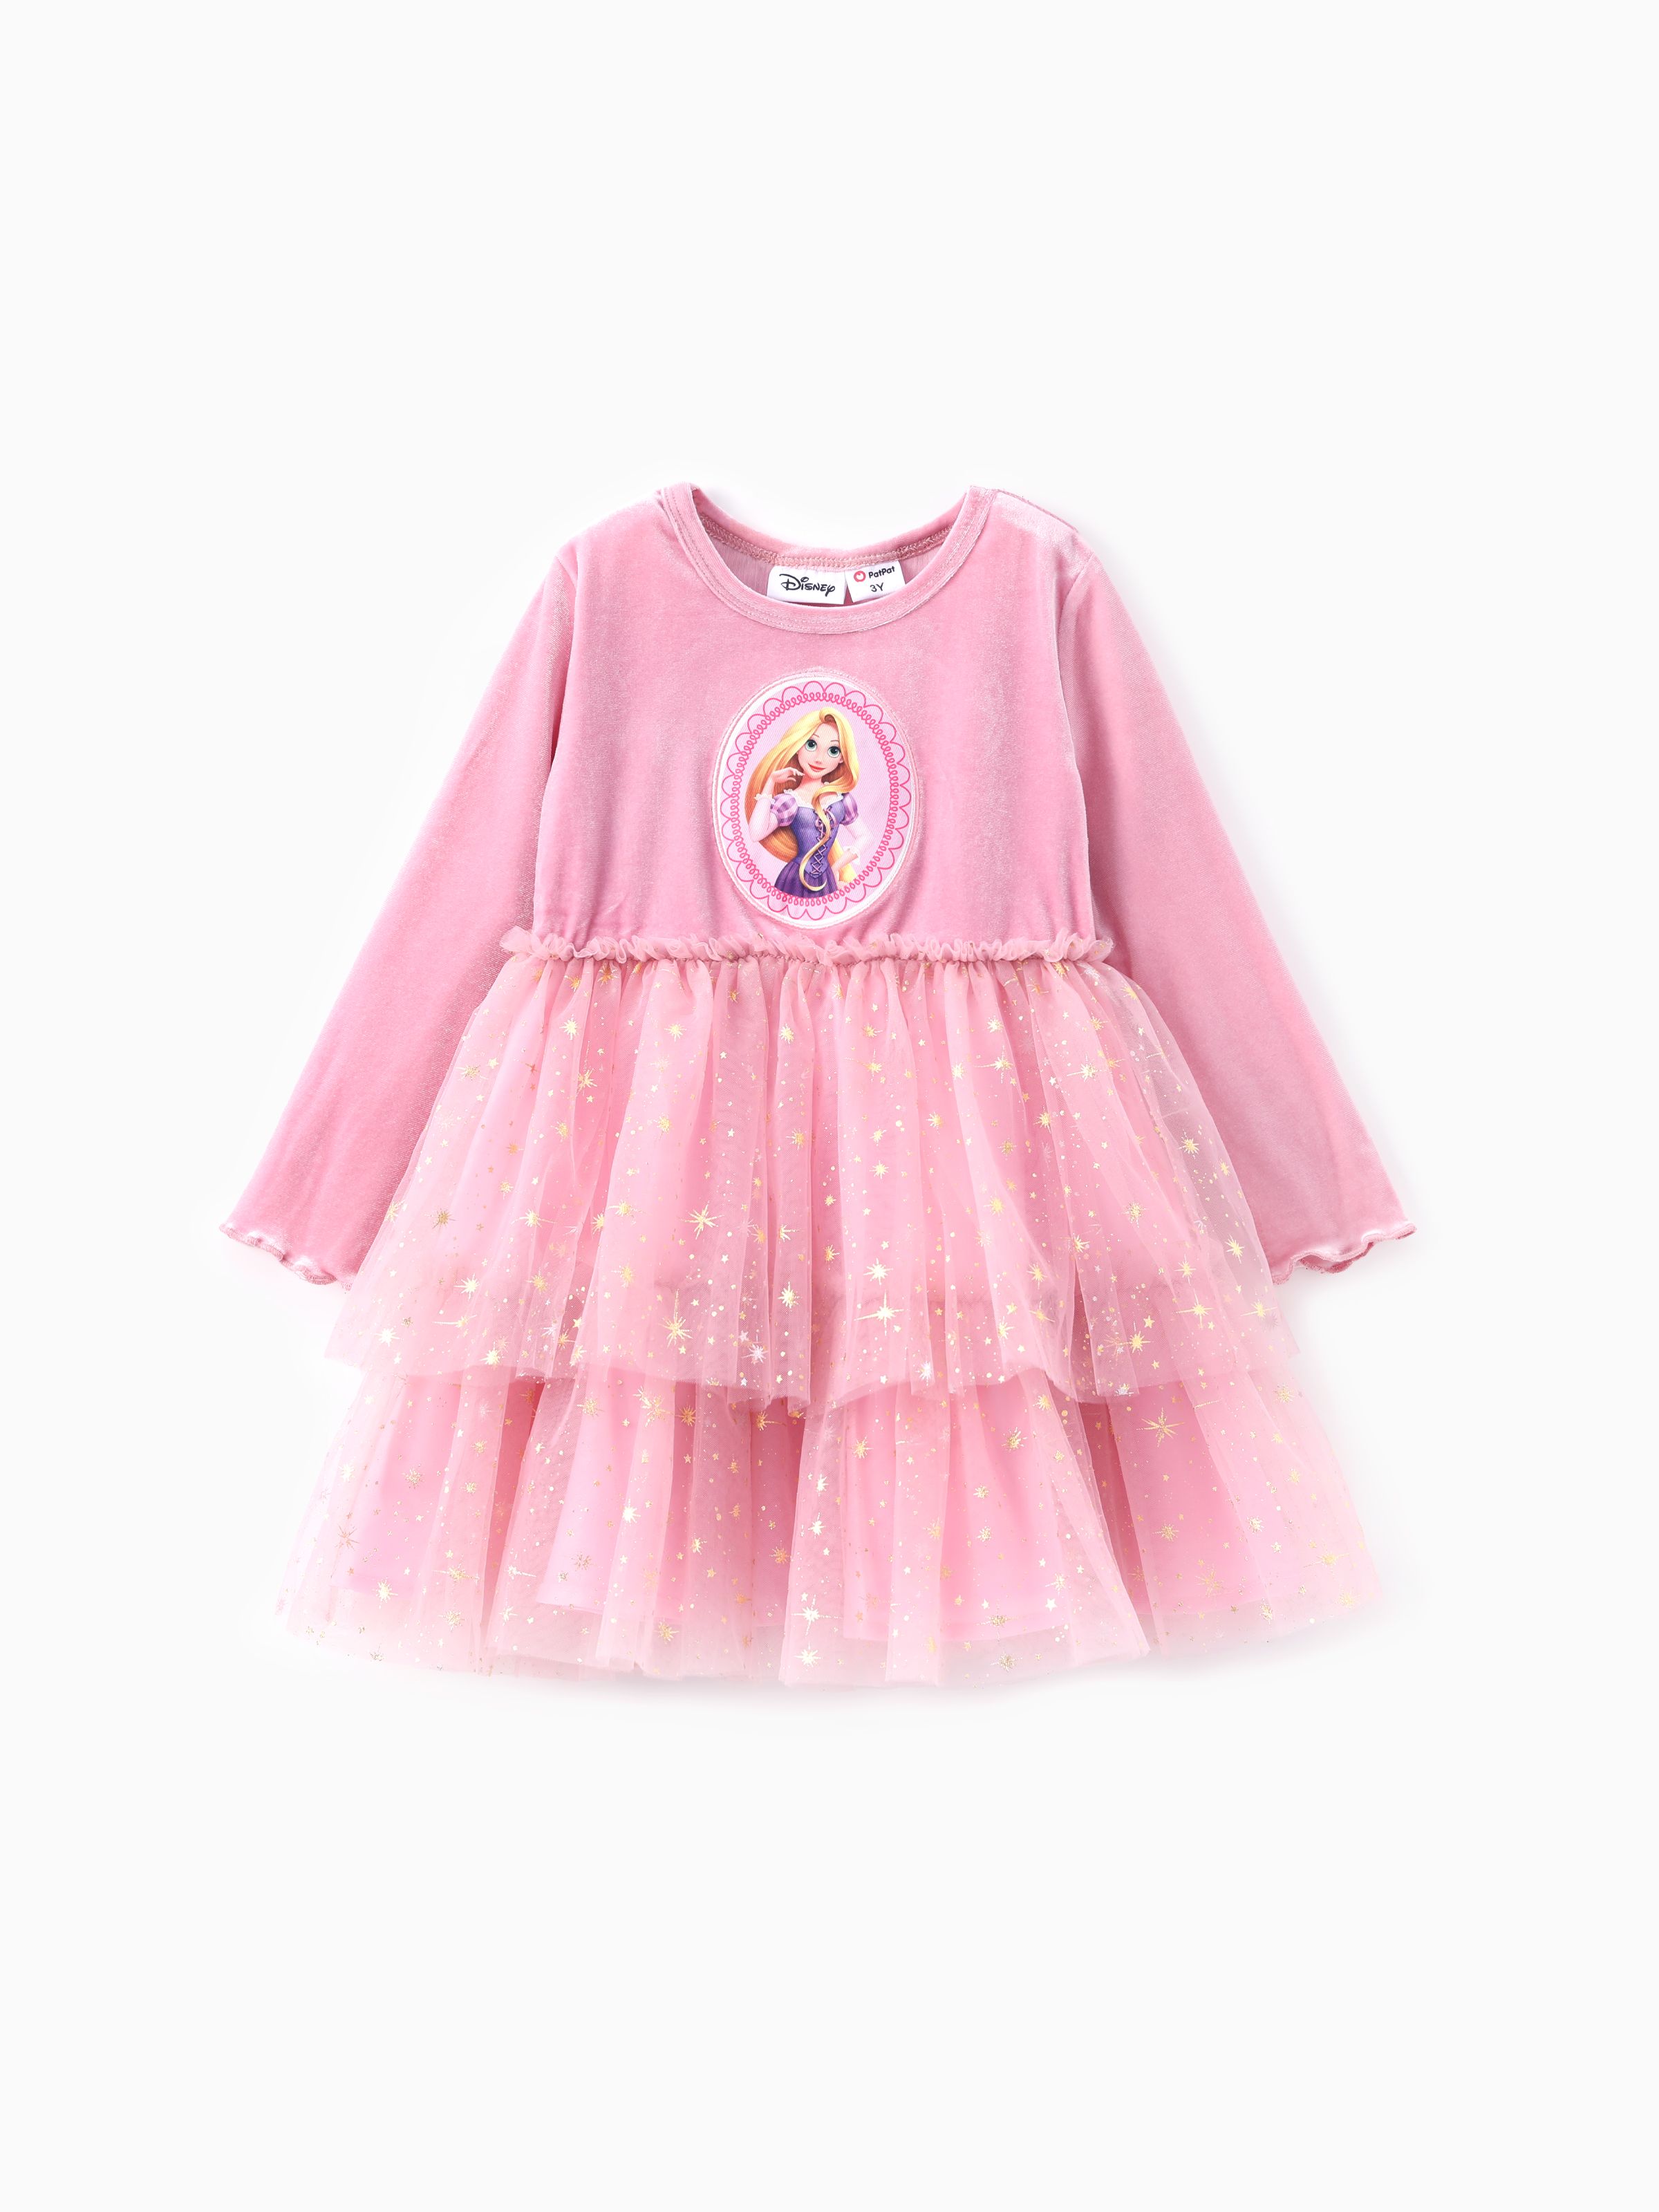 

Disney Princess Toddler Girl 1pc Rapunzel/Belle Long-sleeve Tulle Dress